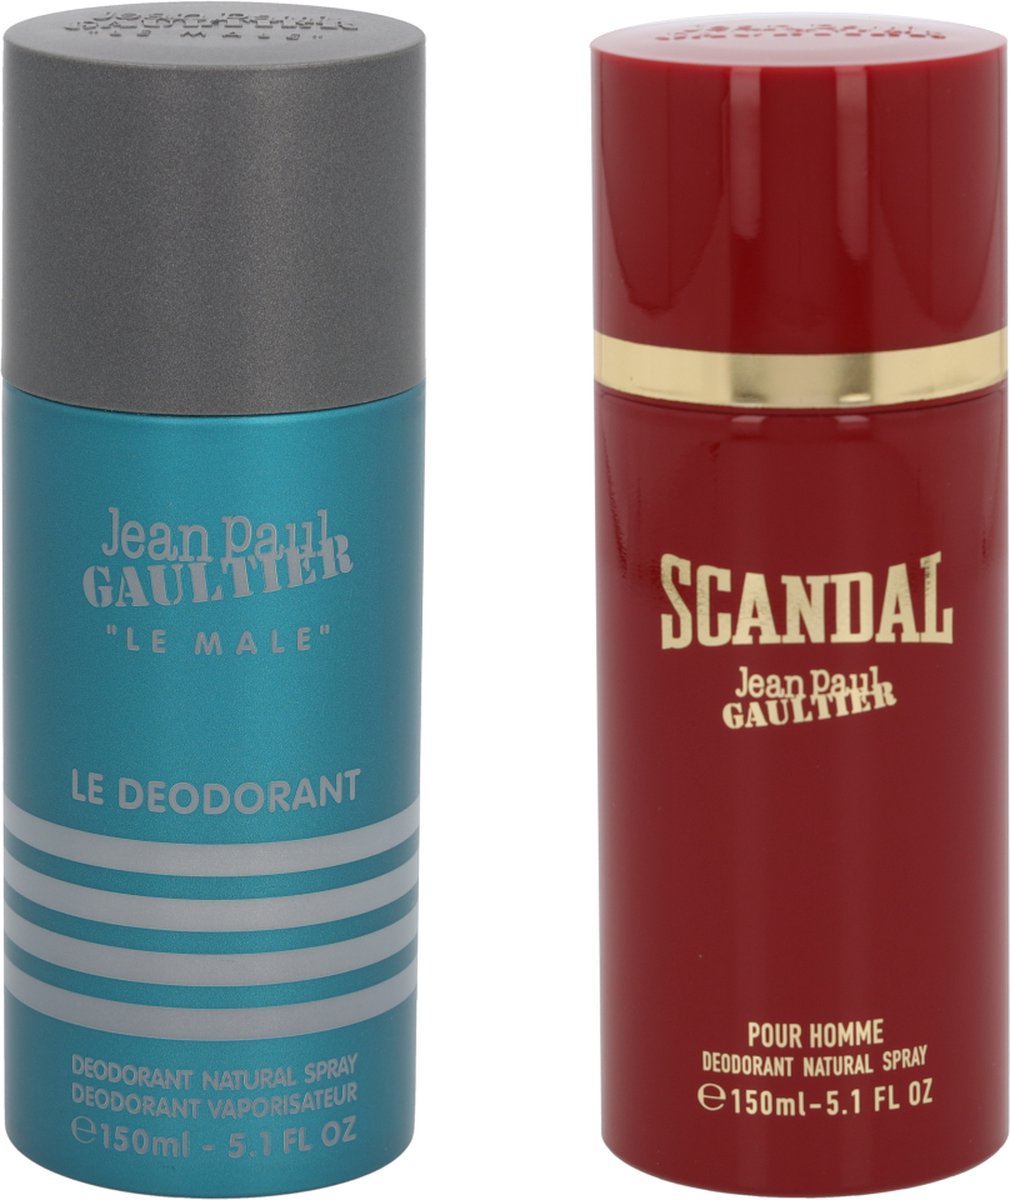 J.P. Gaultier Deo Spray Bundel: Le Male Deodorant Natural Spray 150ml + Scandal For Him Deo Spray 150ml